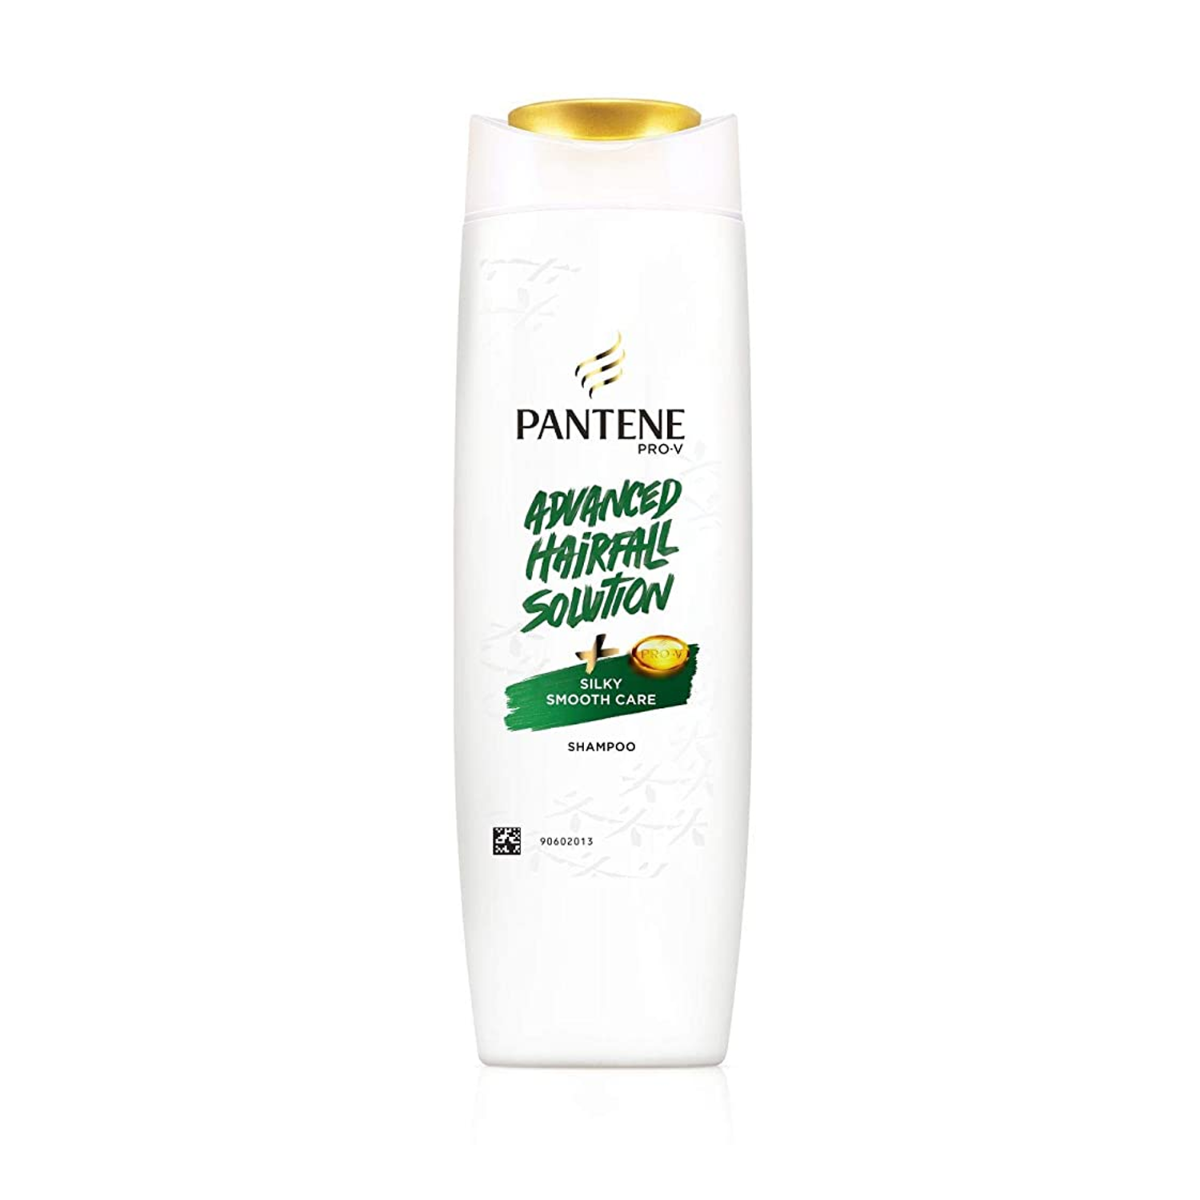 Pantene Advanced Hair Fall Solution Shampoo - Silky Smooth Care, 180ml